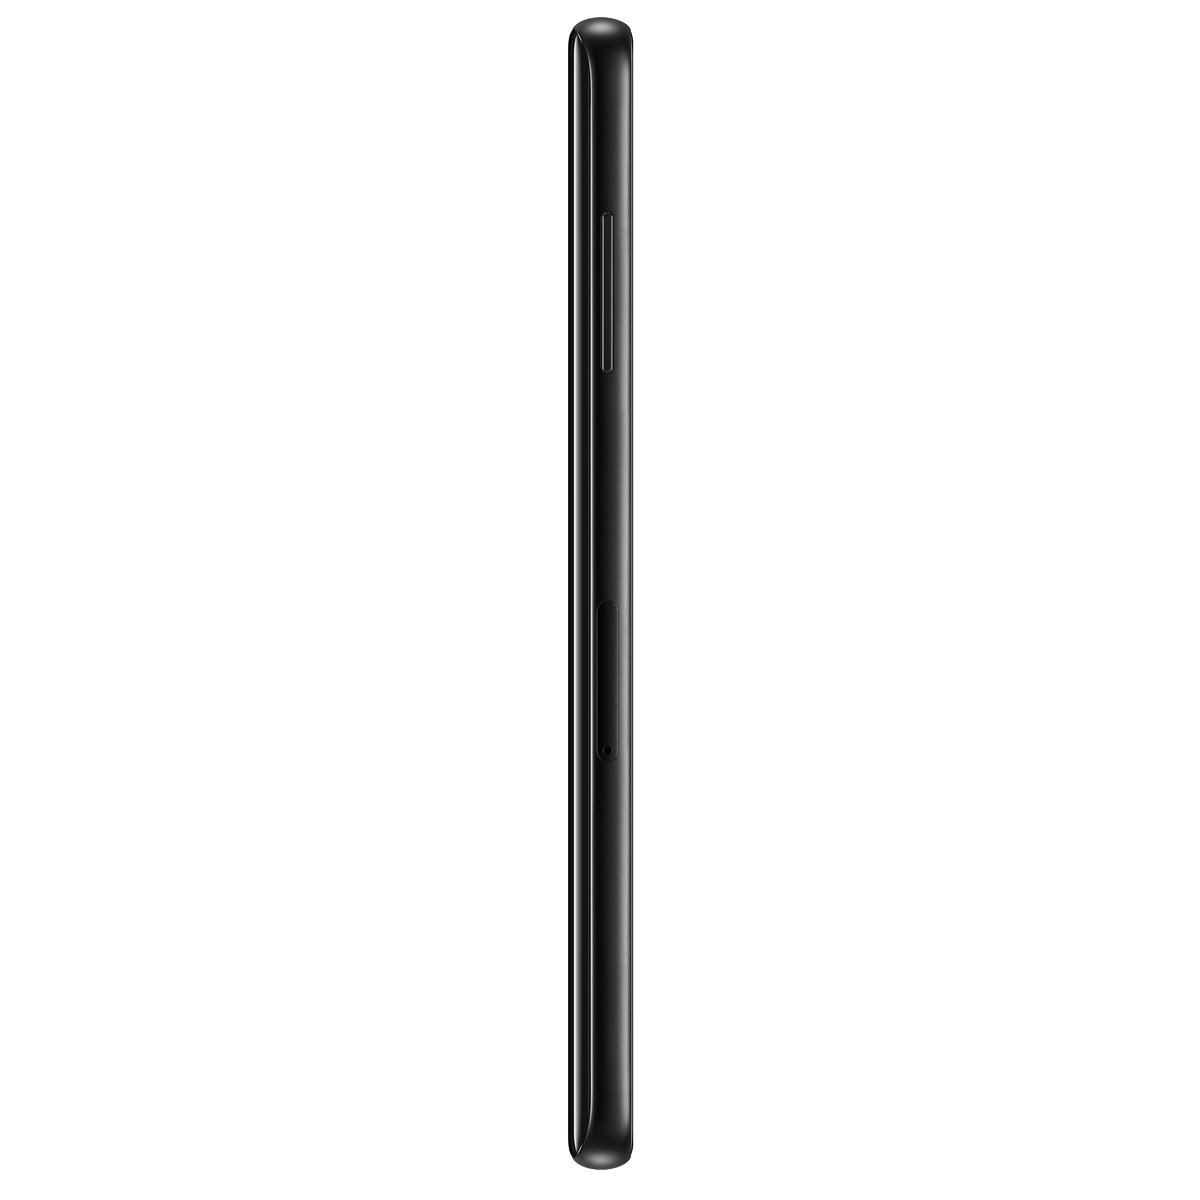 Celular Samsung A530 A8 Color Negro R9 (Telcel)